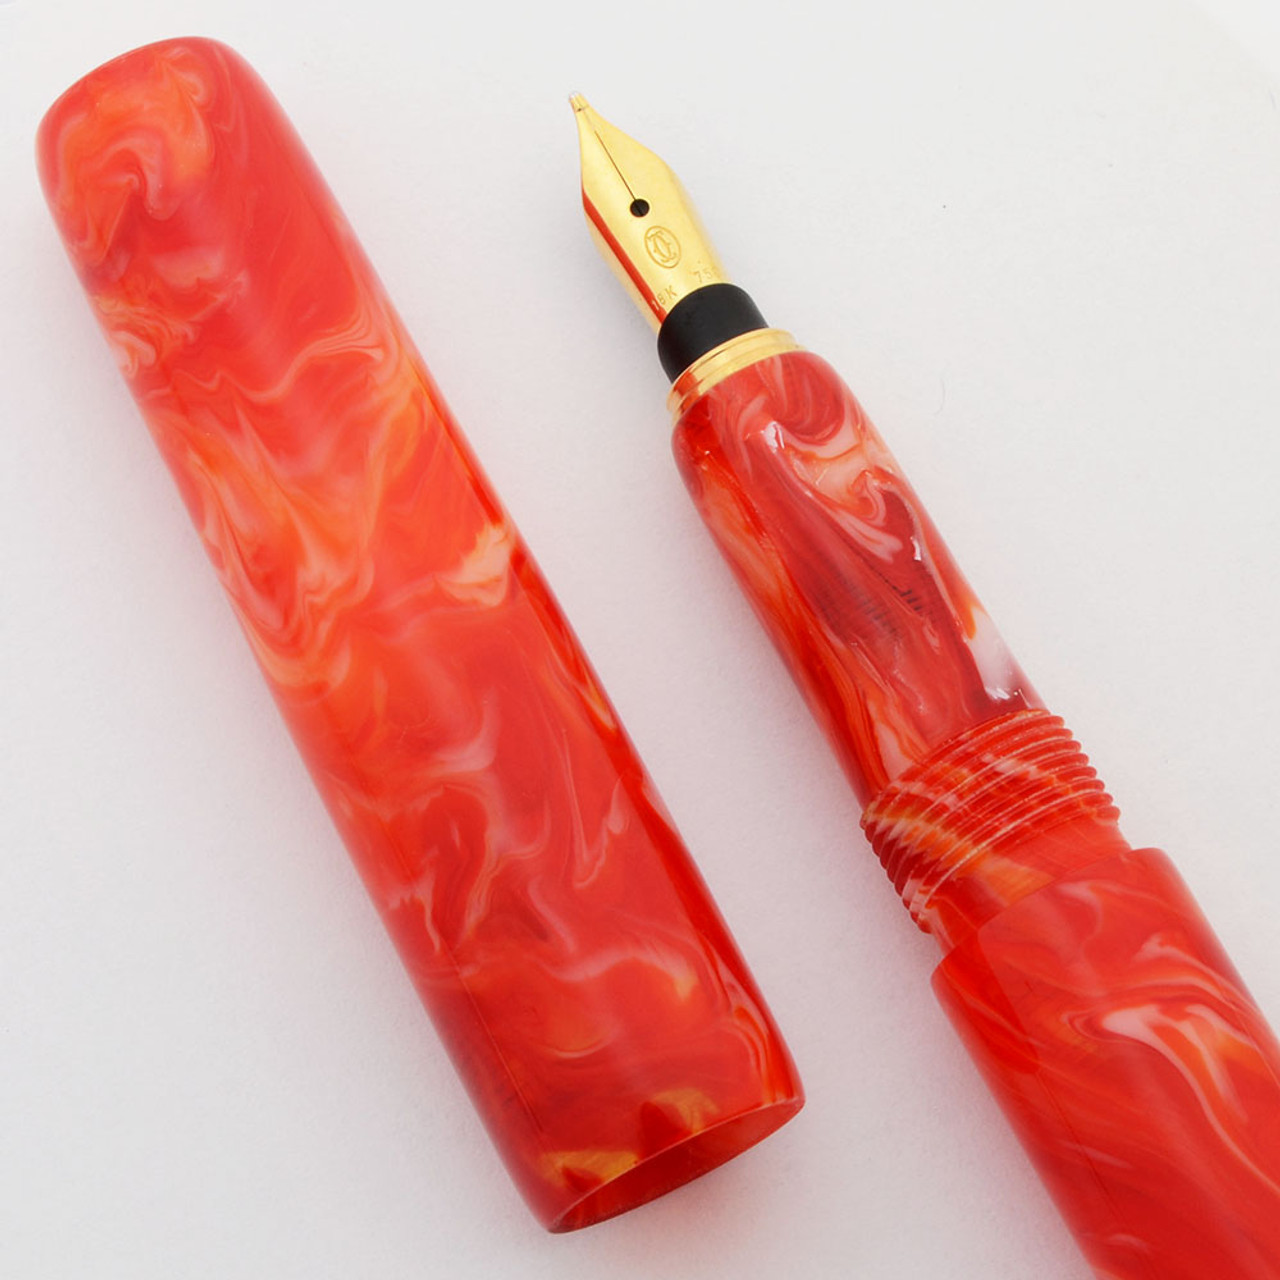 PSPW Prototype Fountain Pen for Cartier 18k Nib Units - "Warm Colors", Slender, Cartridge/Converter (New)